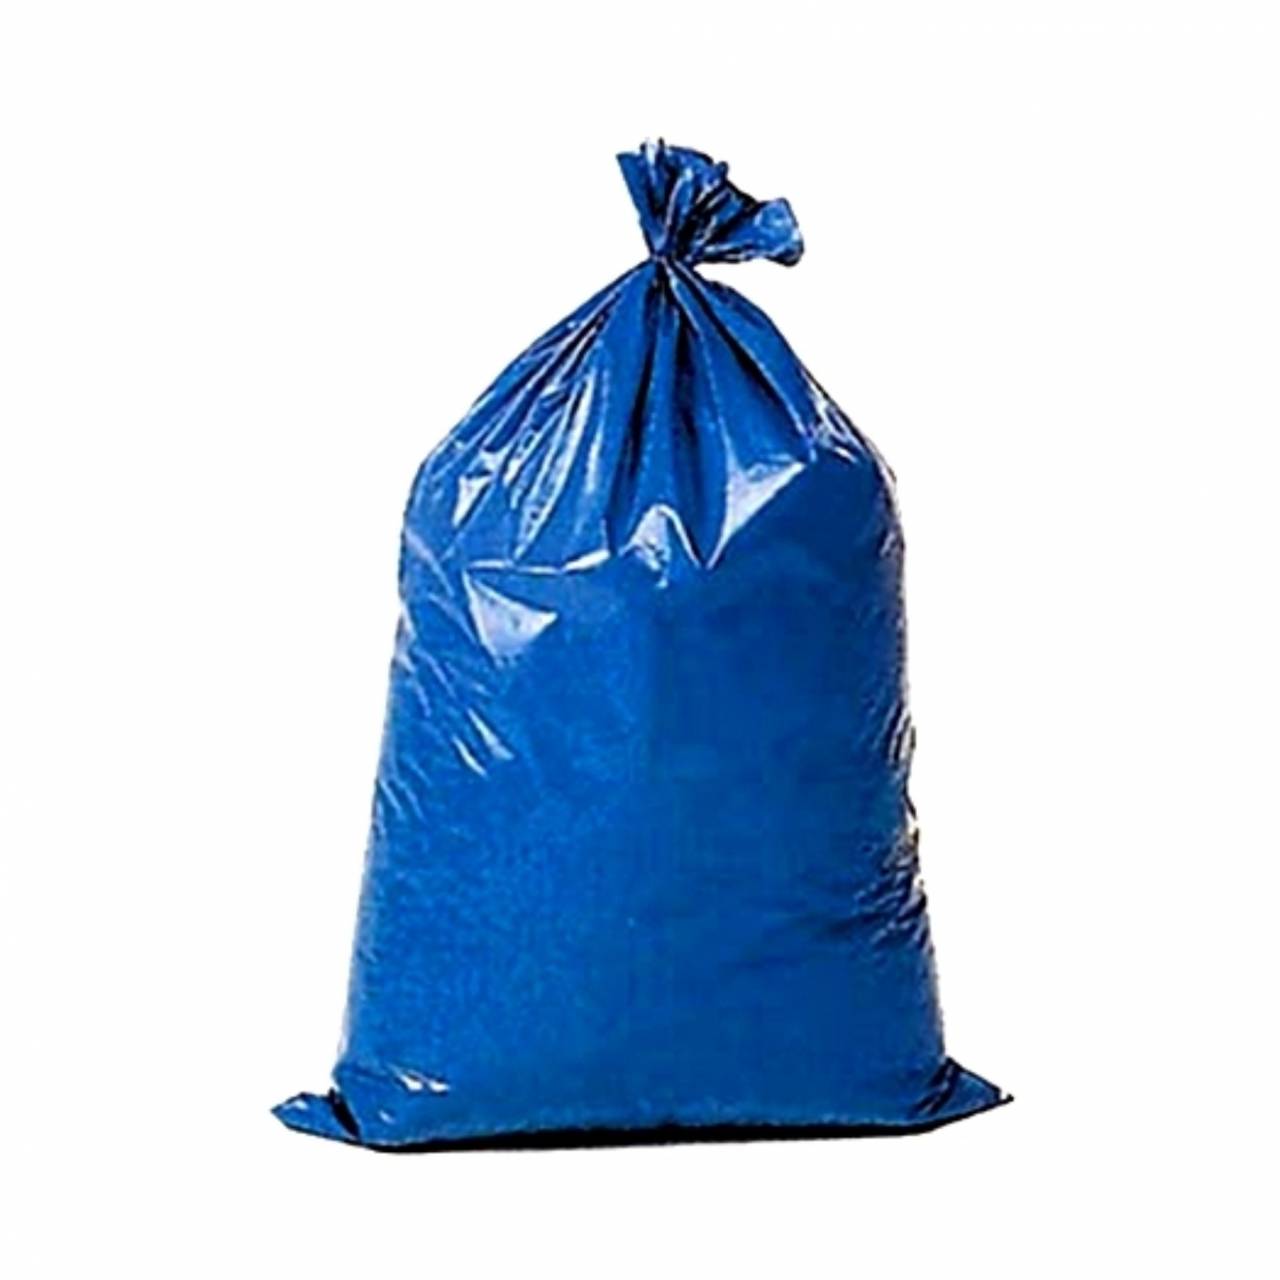 sehr stabil für schweren Abfall 150 Stück Abfallsack Müllsack 120 ltr blau 